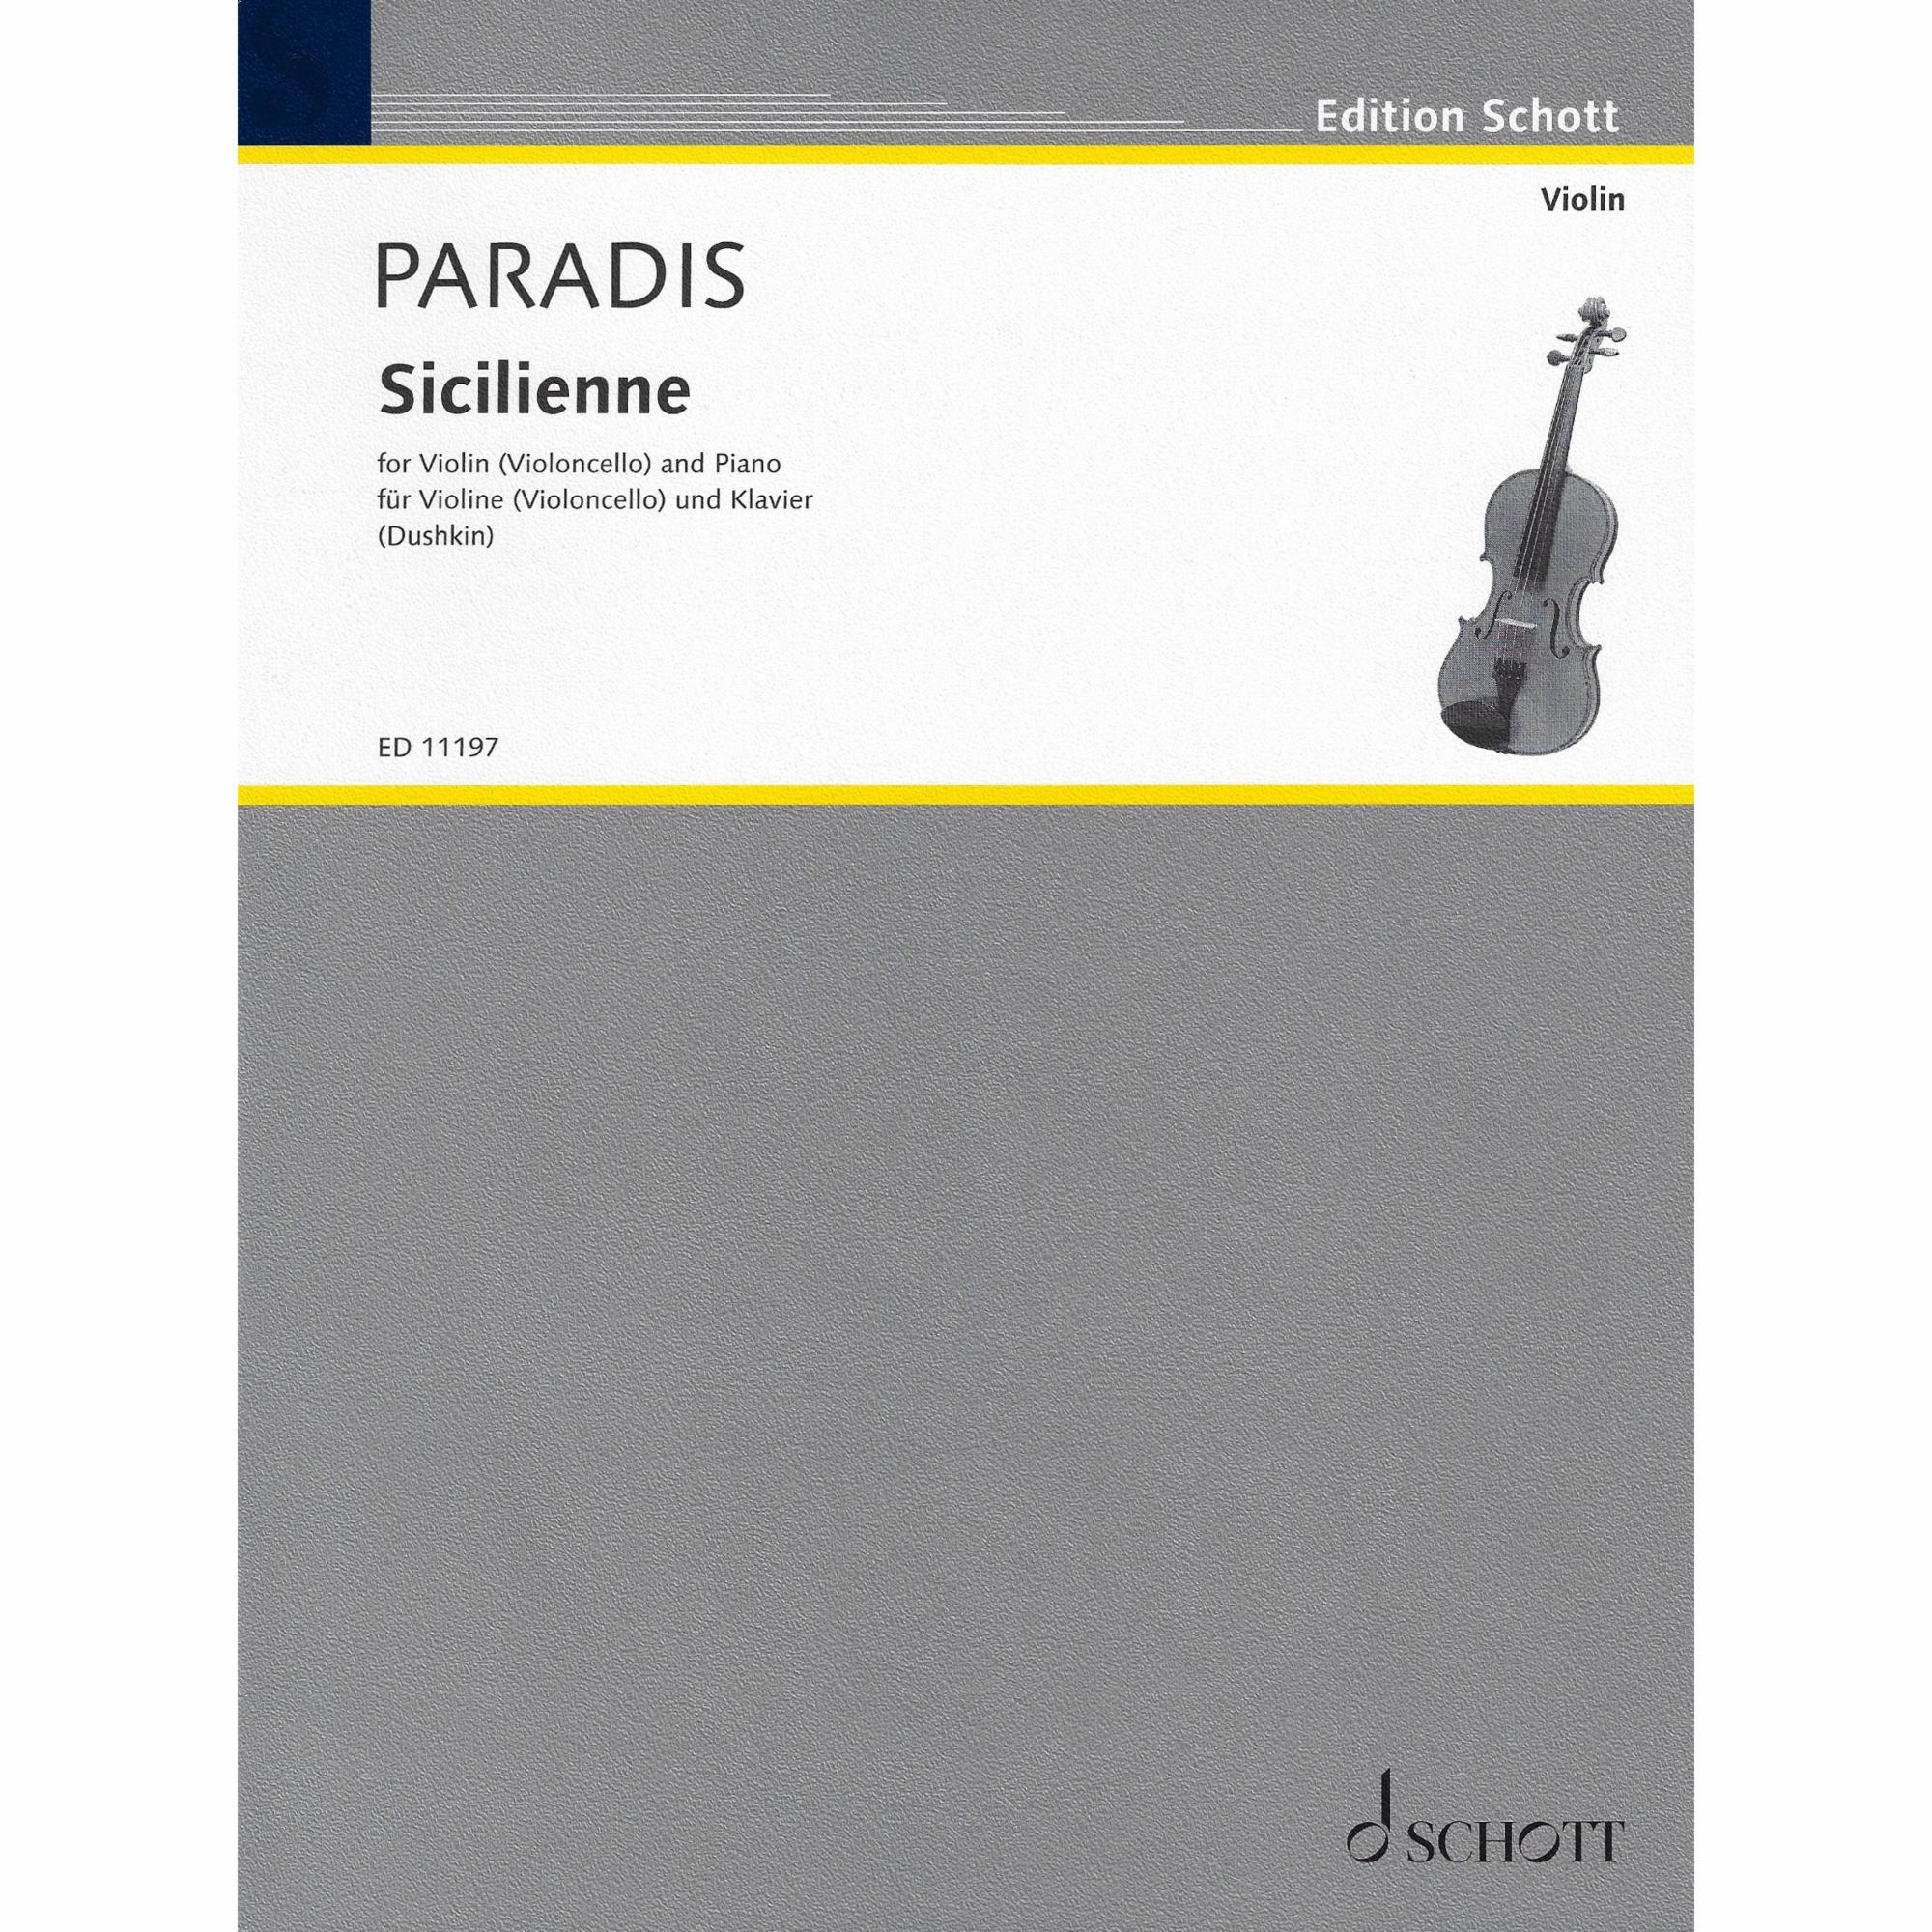 Dushkin/Paradis -- Sicilienne for Violin or Cello and Piano